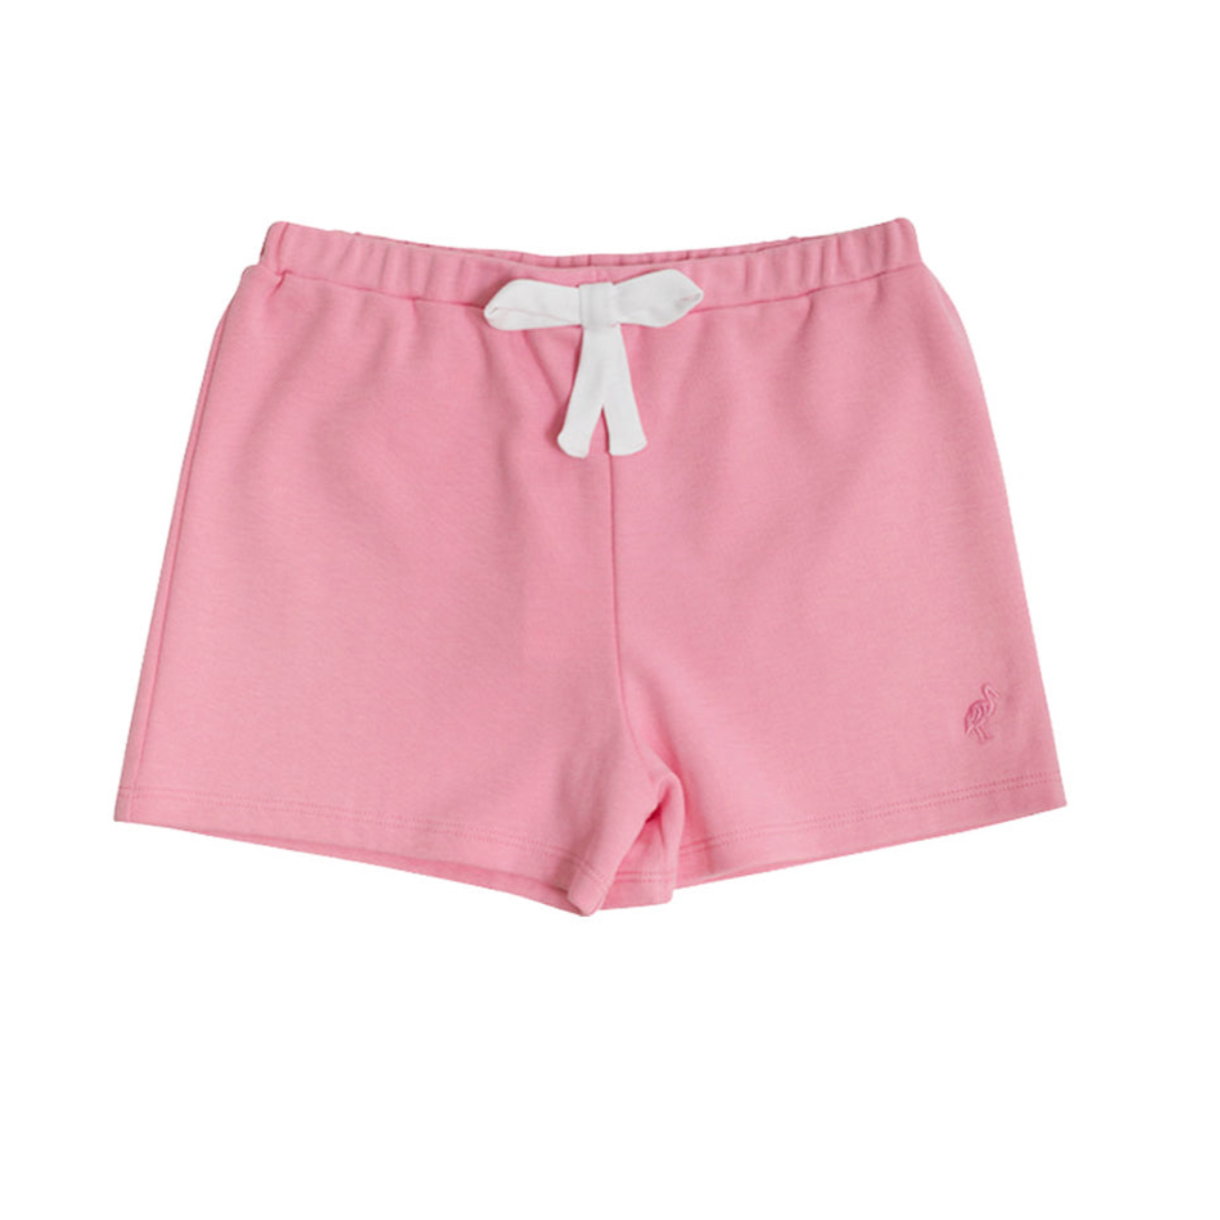 Shipley Shorts Hamptons Hot Pink/Worth Avenue White